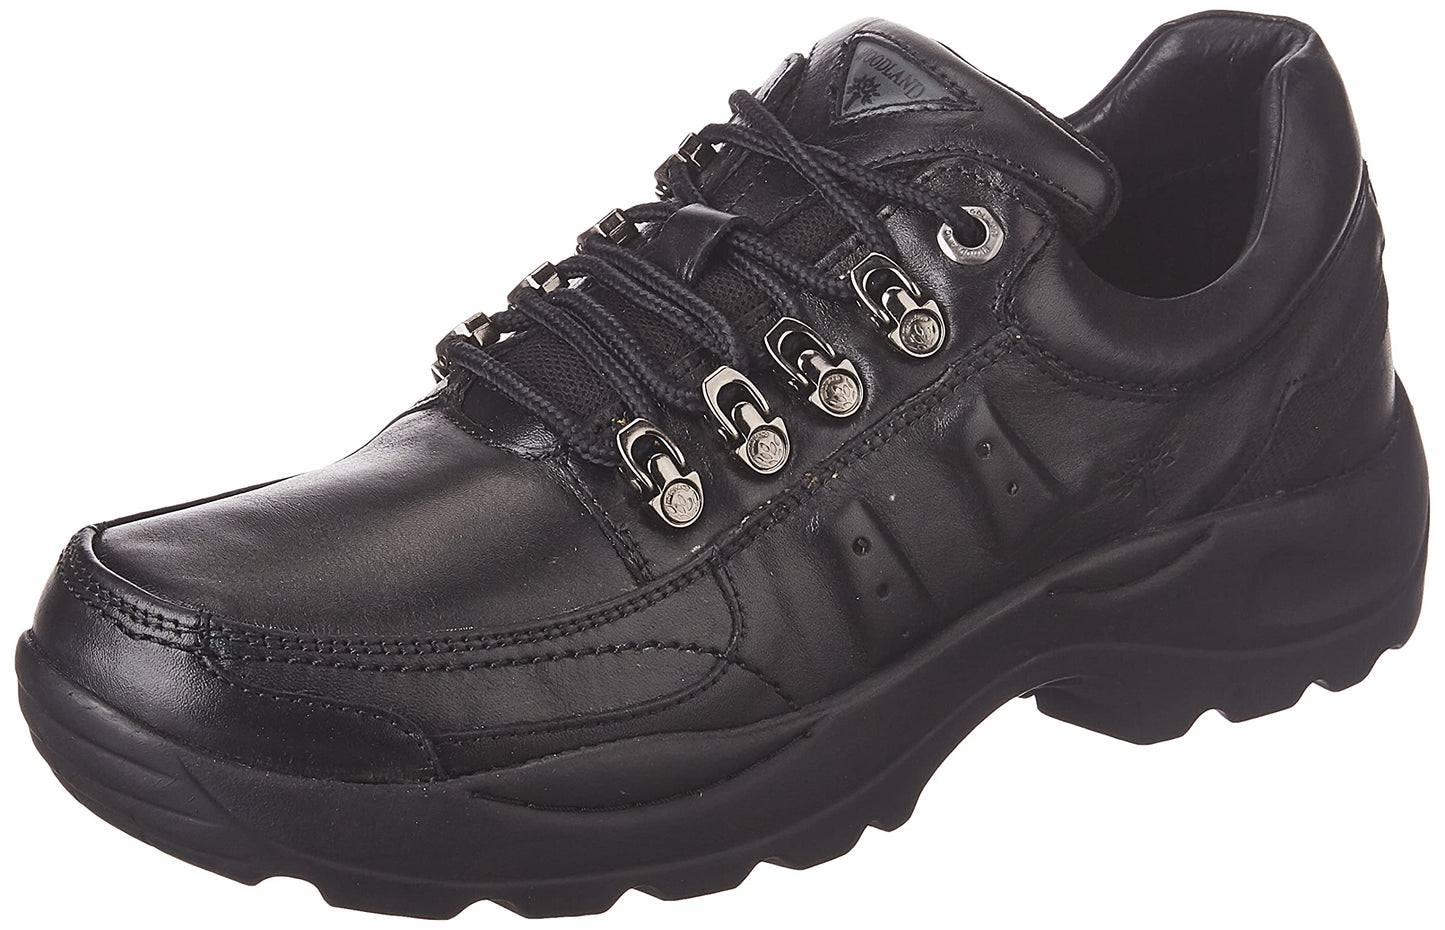 Woodland Men's Black Leather Sneaker (GC 3585119)